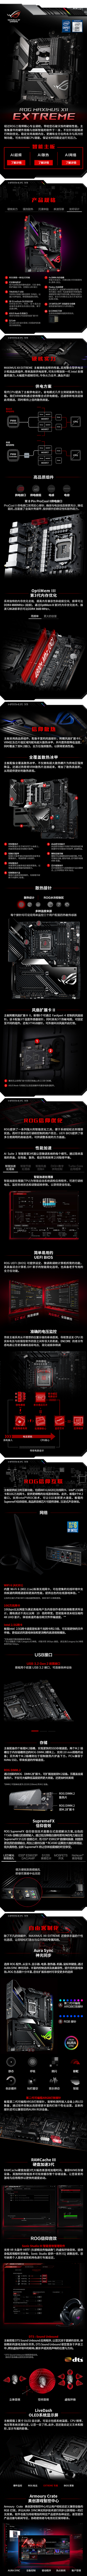 Rog Maximus Xii Extreme主板m12e 支持cpu k k Intel Z490 Lga 10 Asus华硕官网 笔记本电脑 一体机 Diy配件 手机 台式机官方网站